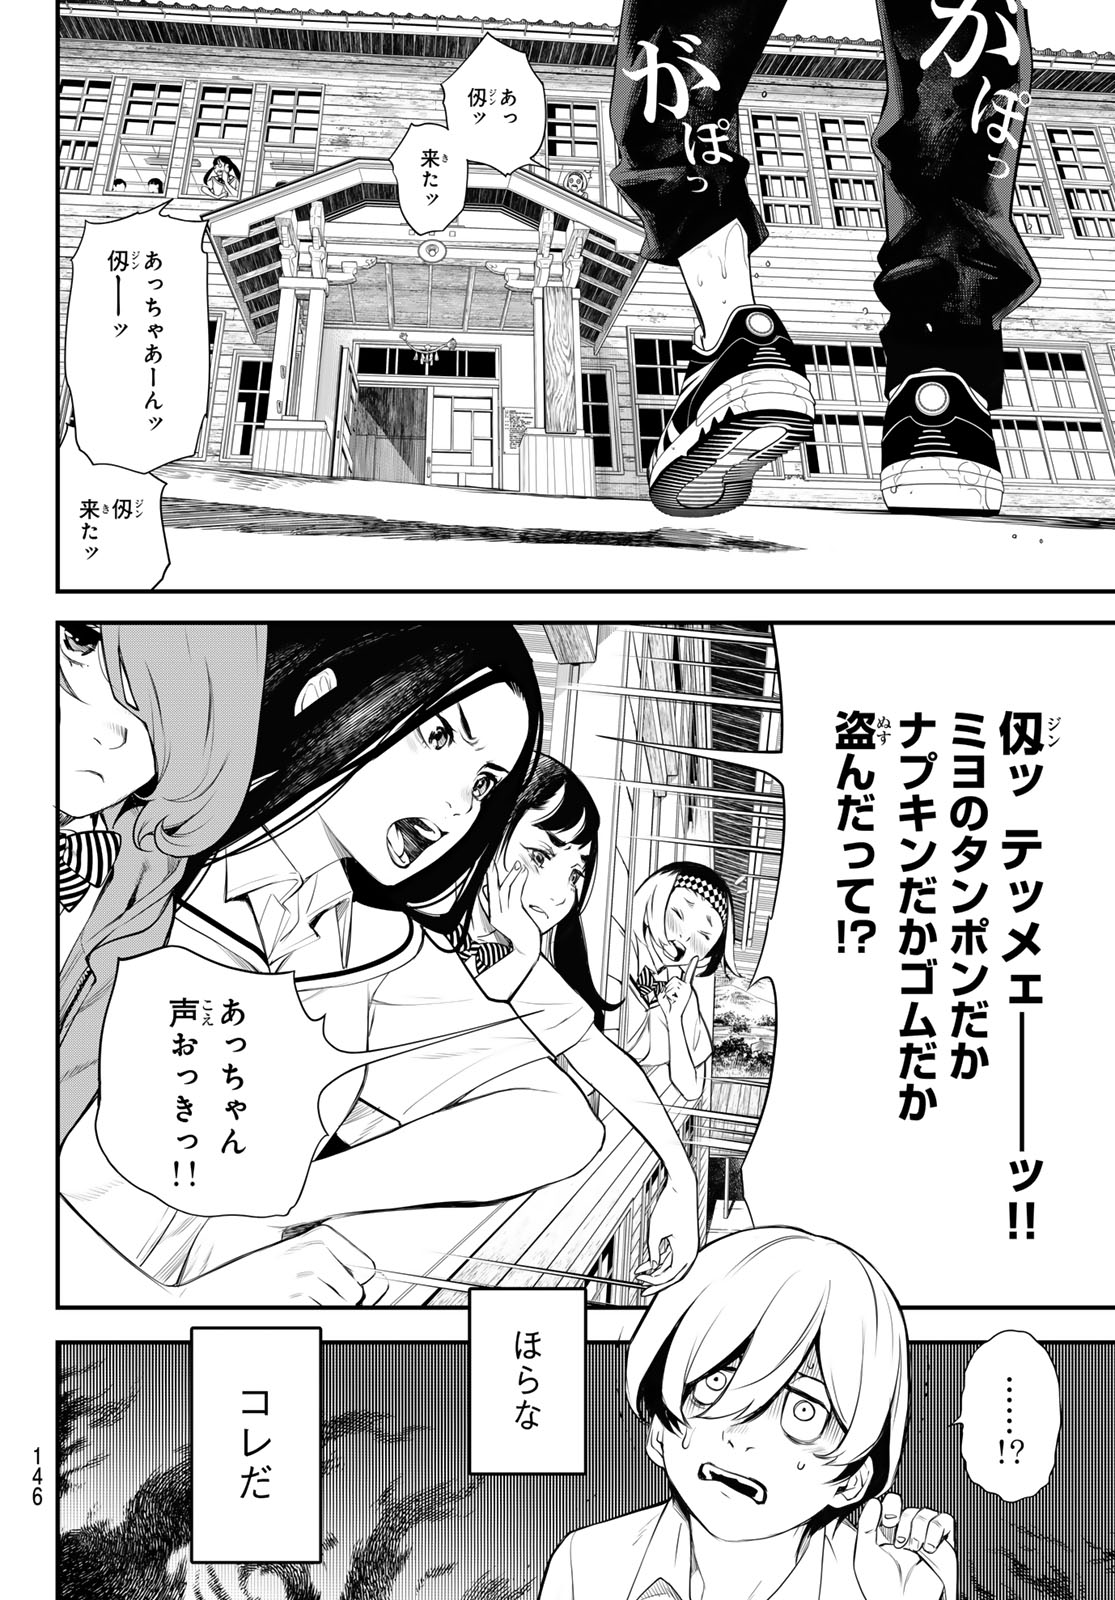 Kaijin Fugeki - Chapter 2 - Page 18